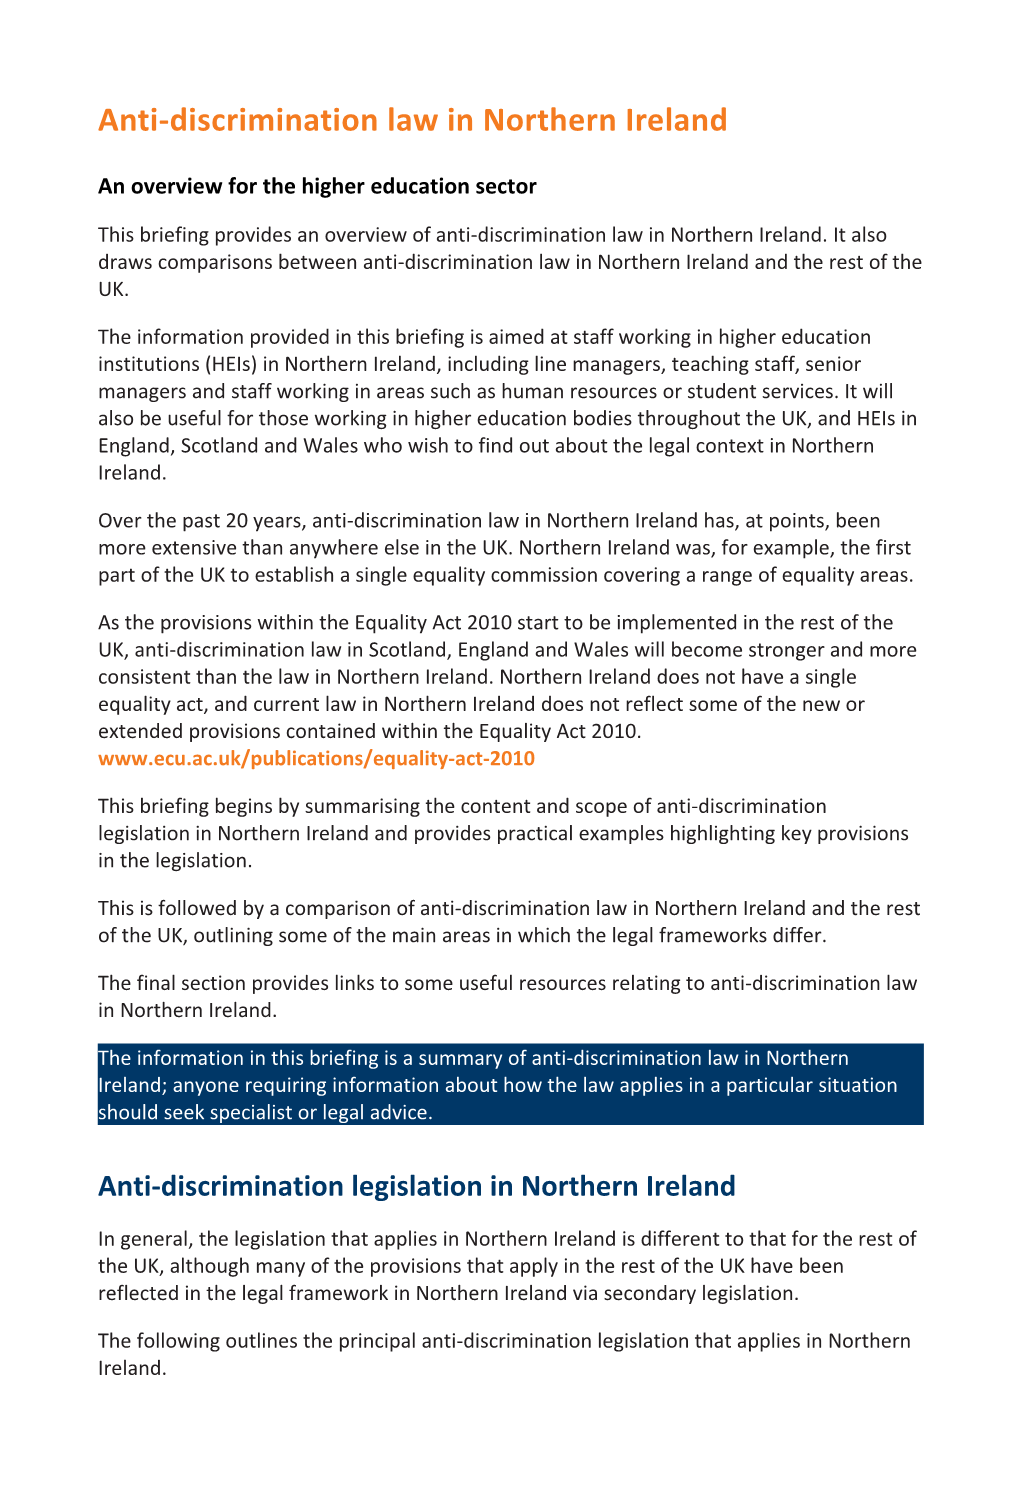 Anti-Discrimination Law in Northern Ireland